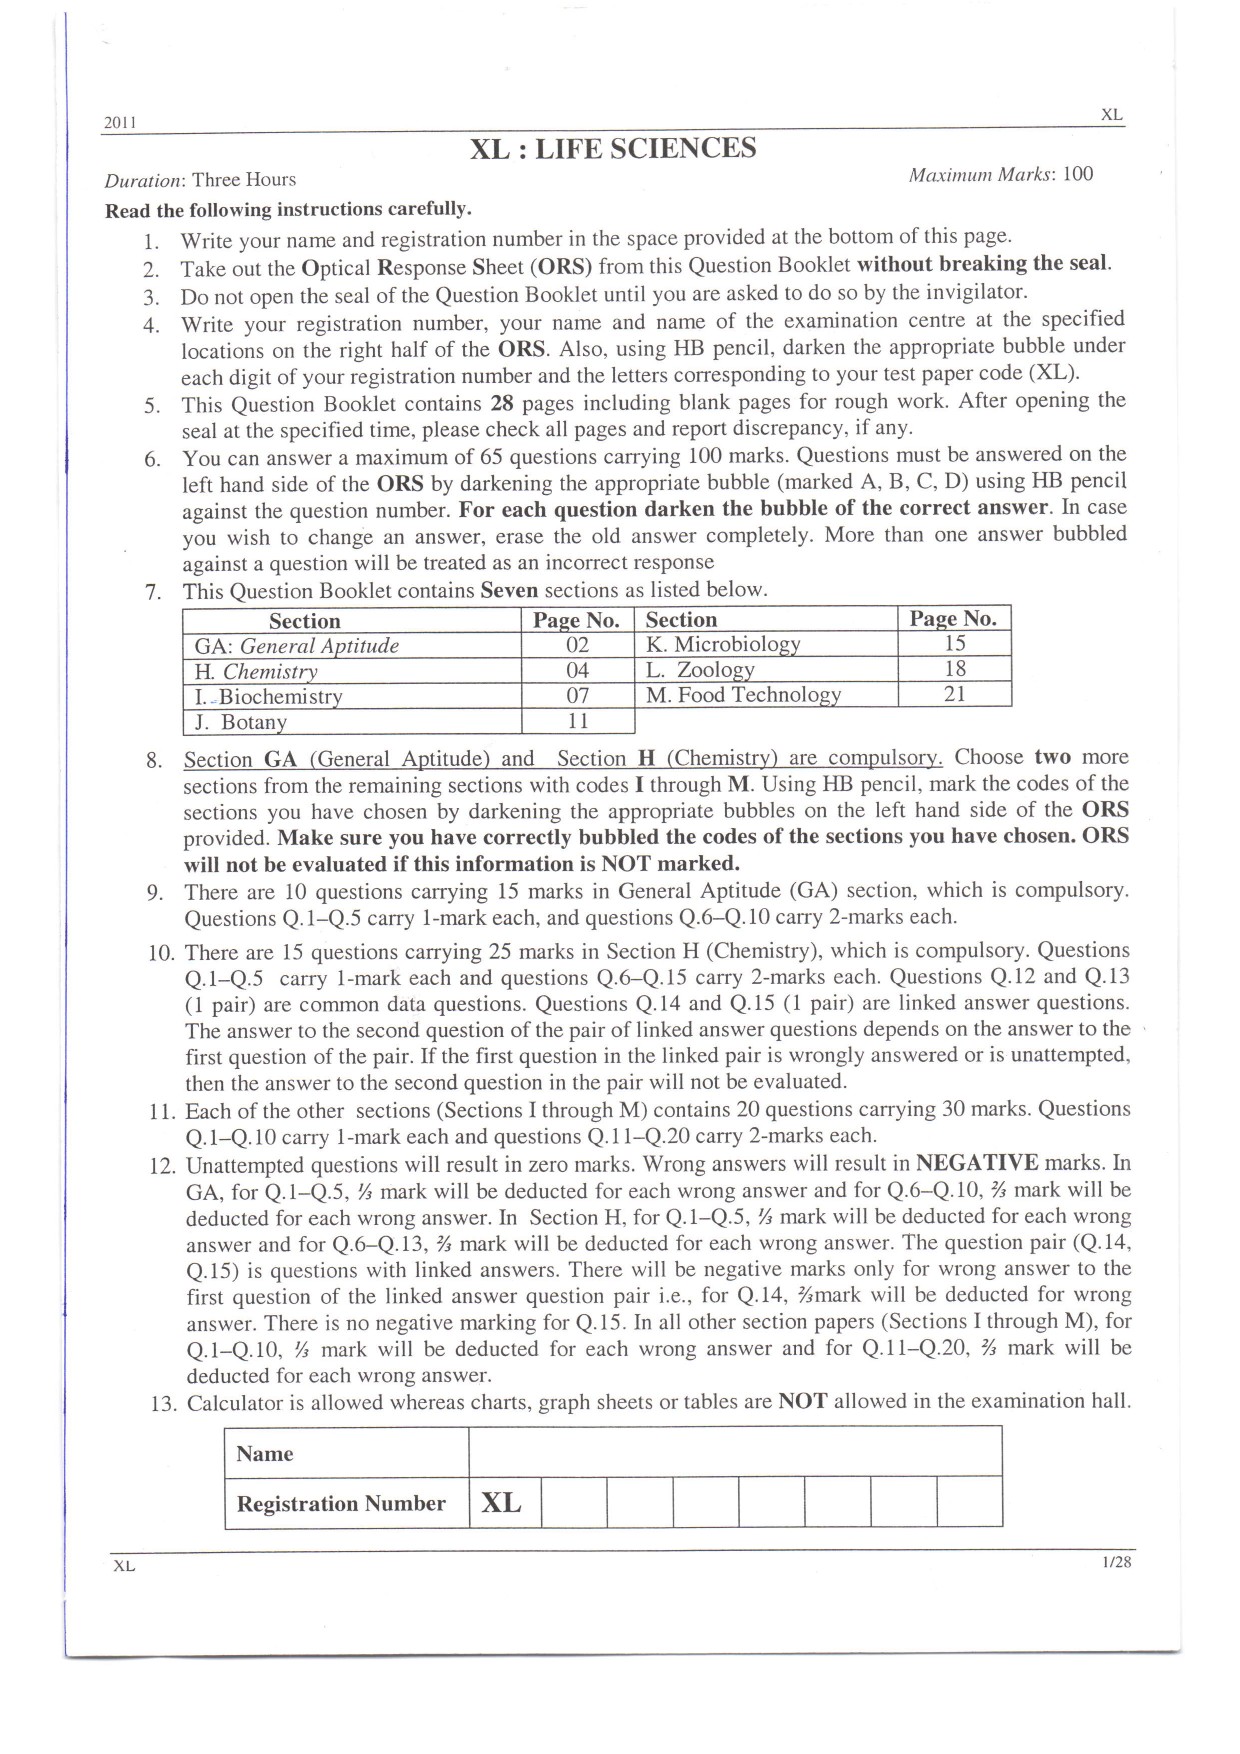 GATE Exam Question Paper 2011 Life Sciences 1